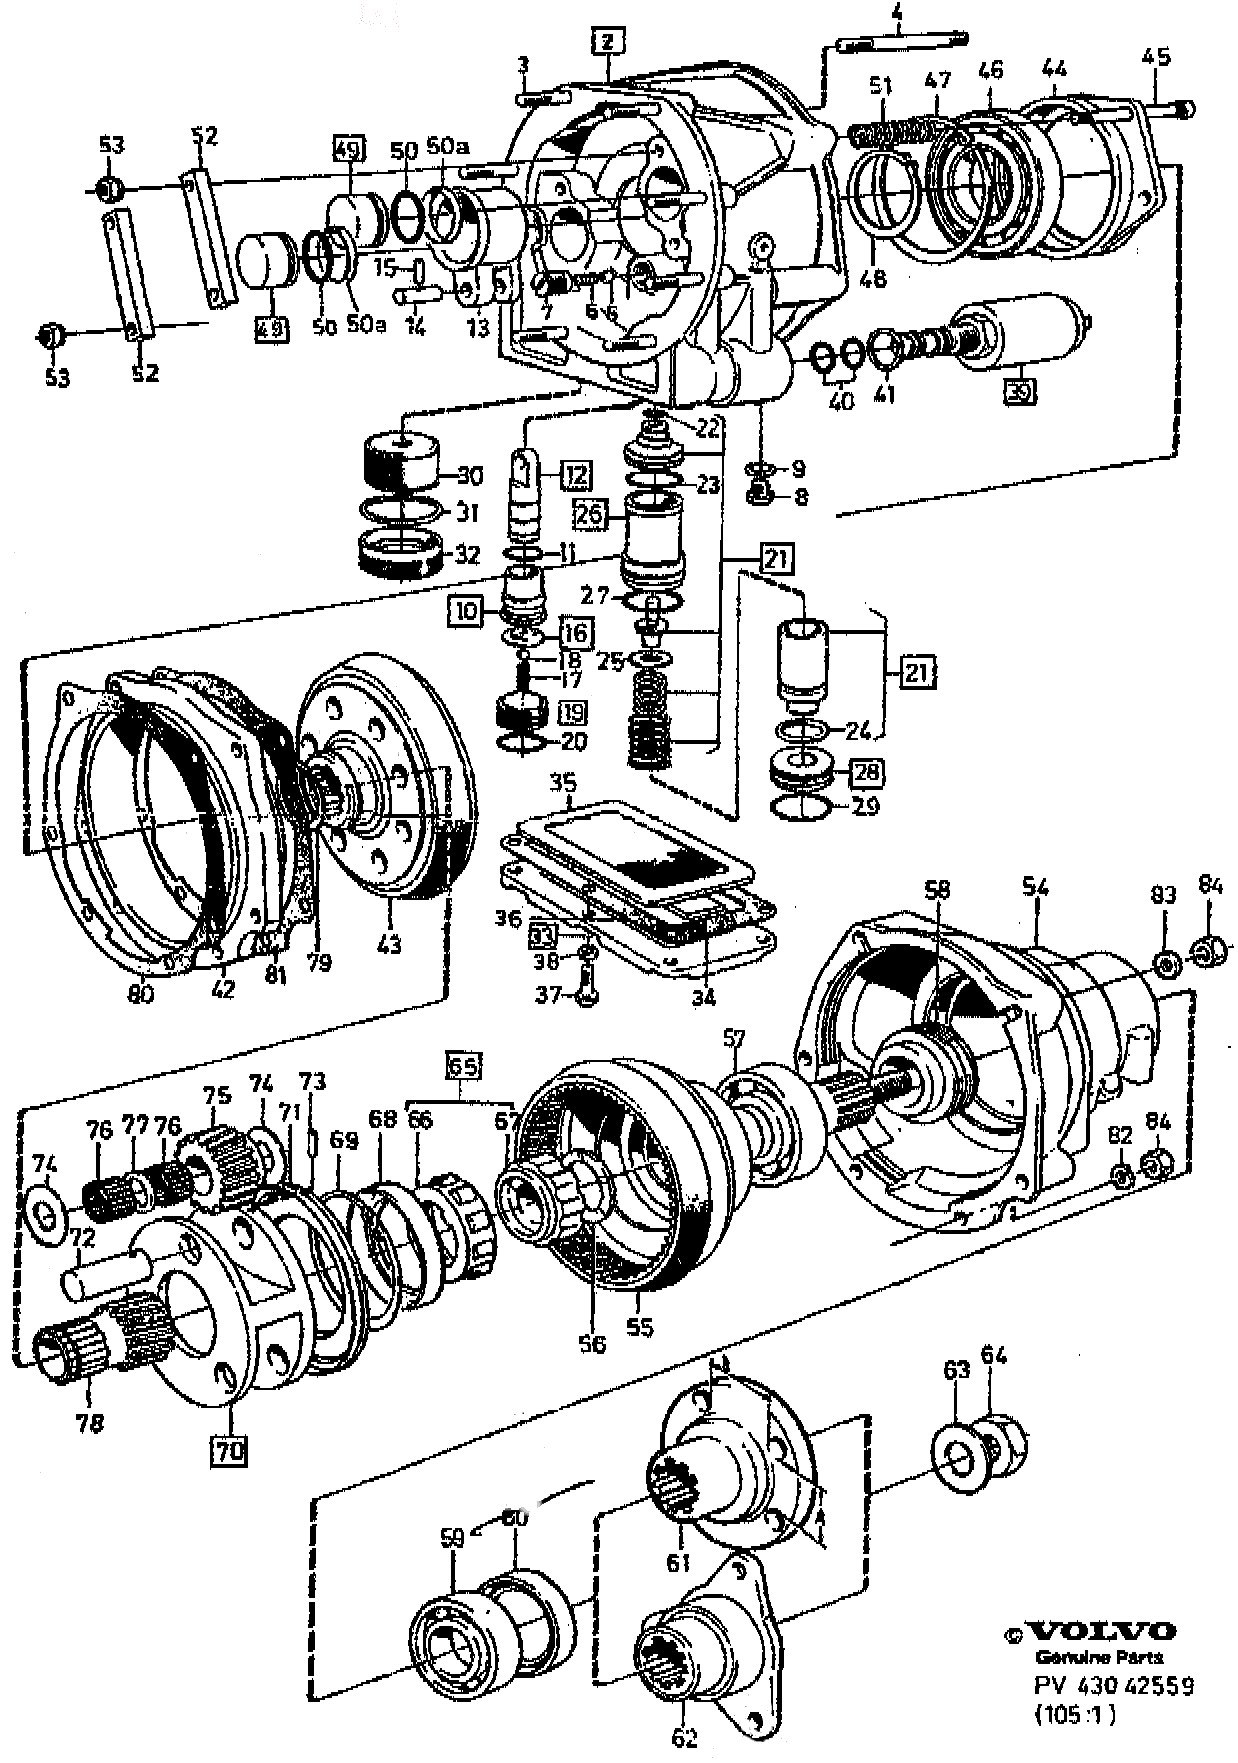 Car Parts Diagram Pdf M46 Diagram Of Car Parts Diagram Pdf